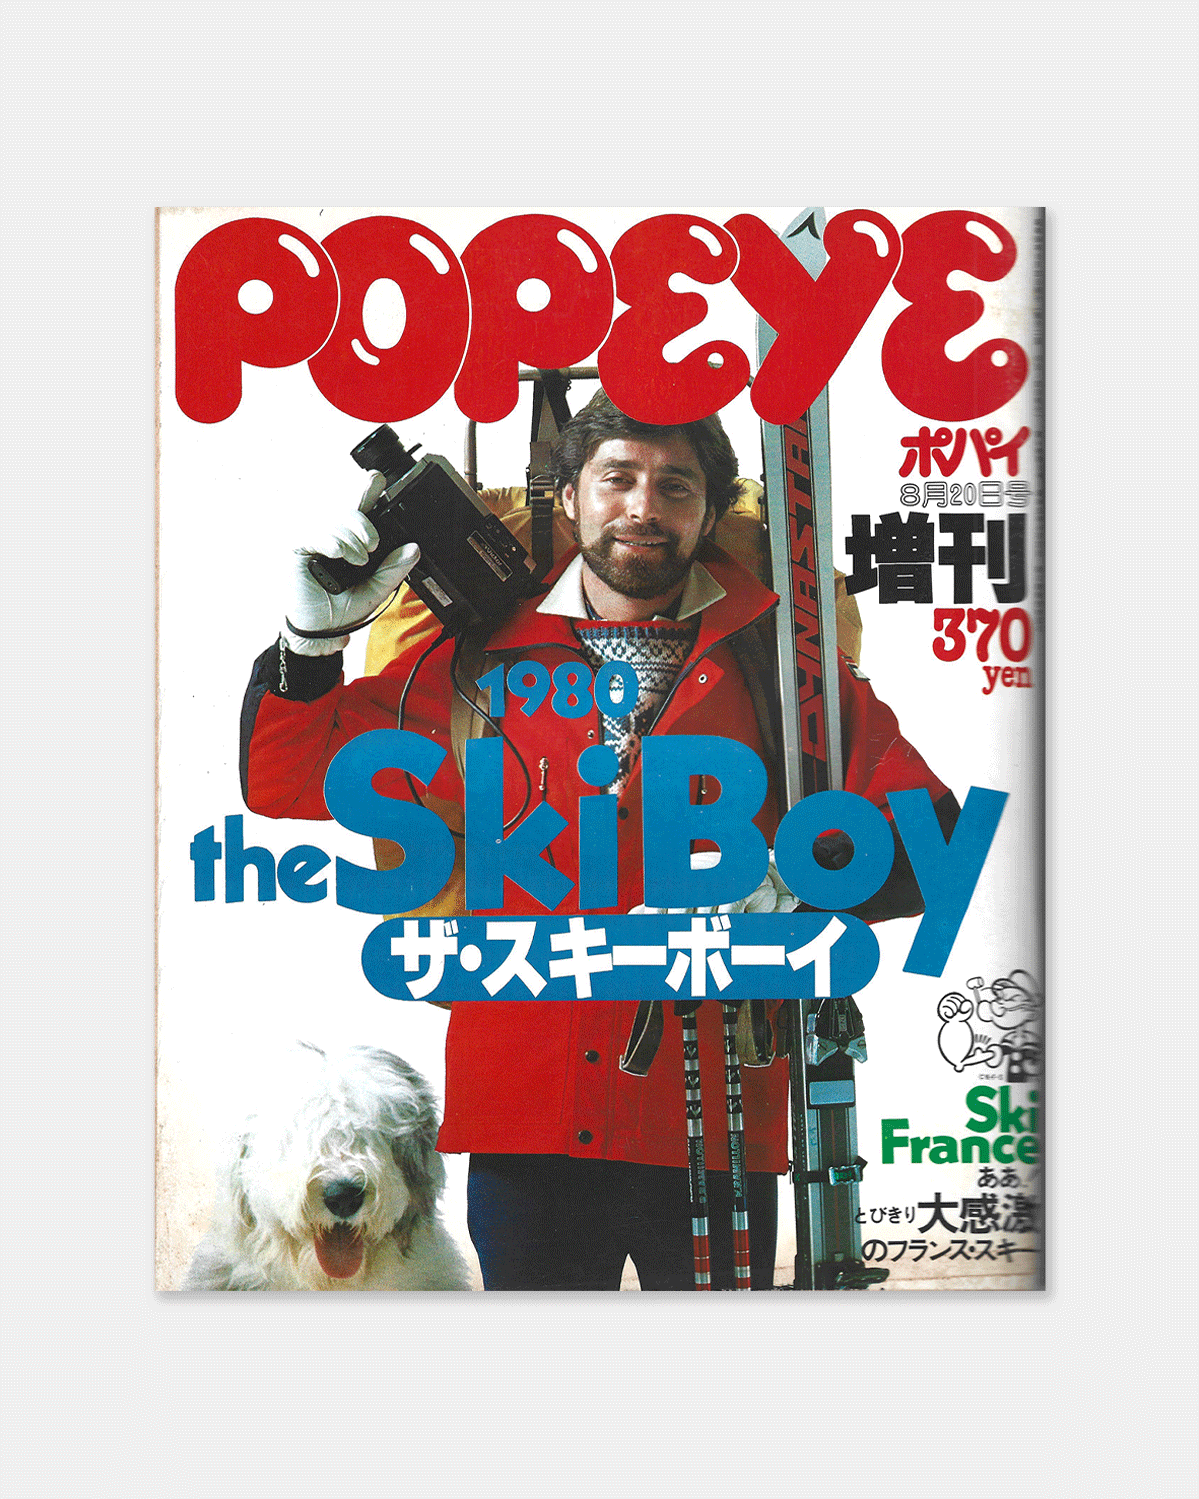 Popeye Magazine August 1980 (Special Issue #5 -Ski Boy)